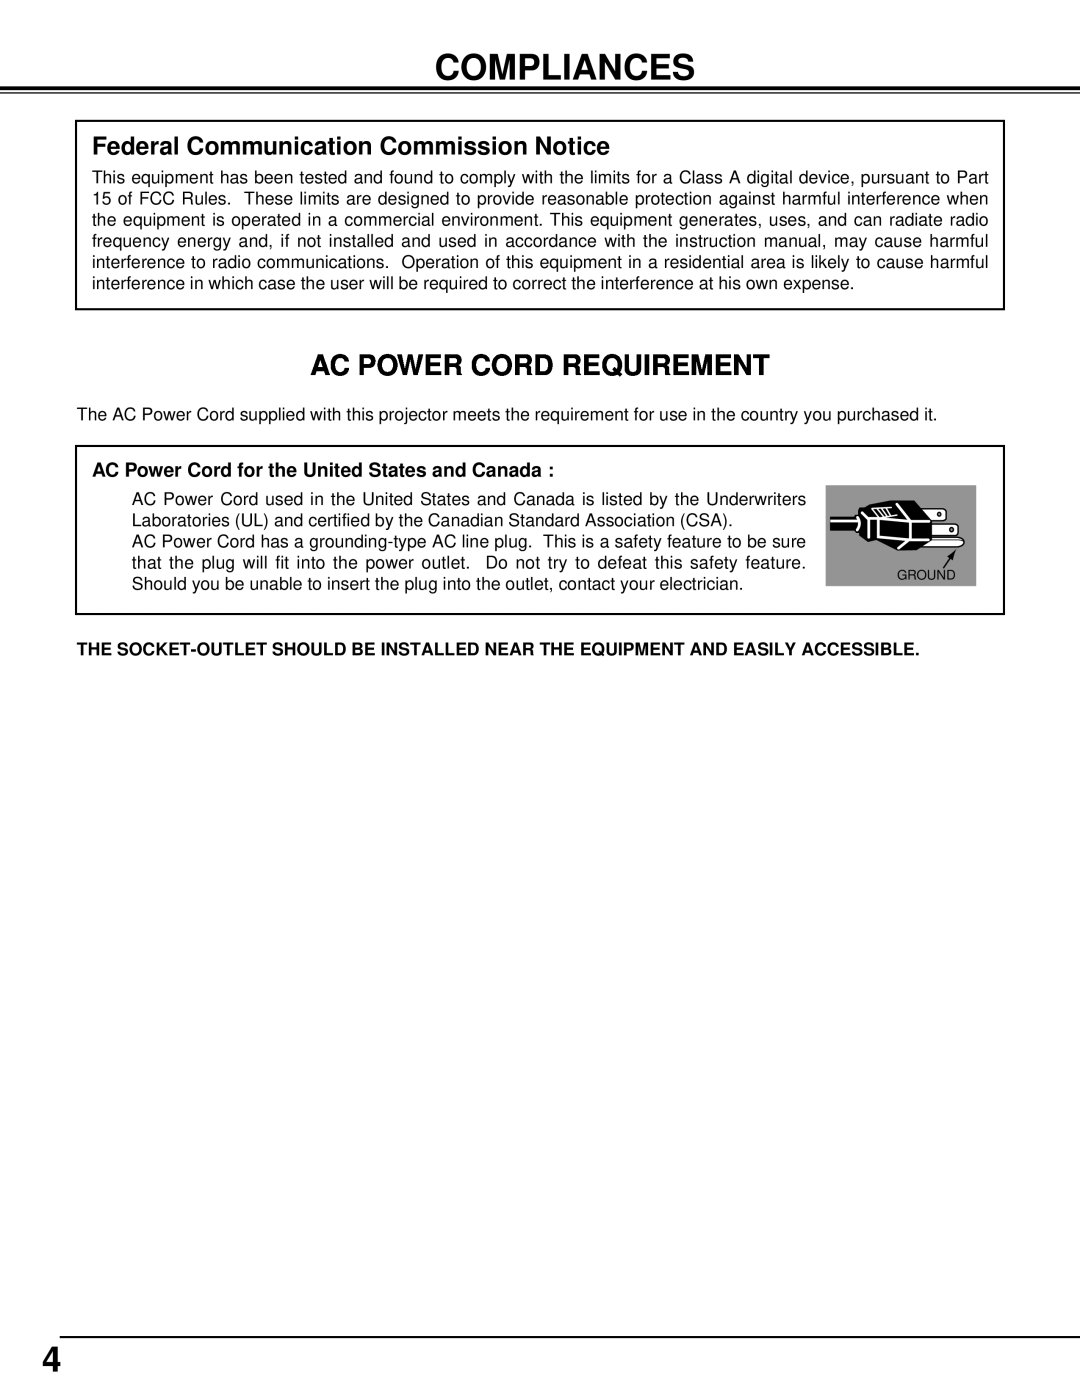 BOXLIGHT XP-5t manual Compliances, Ac Power Cord Requirement, Federal Communication Commission Notice 